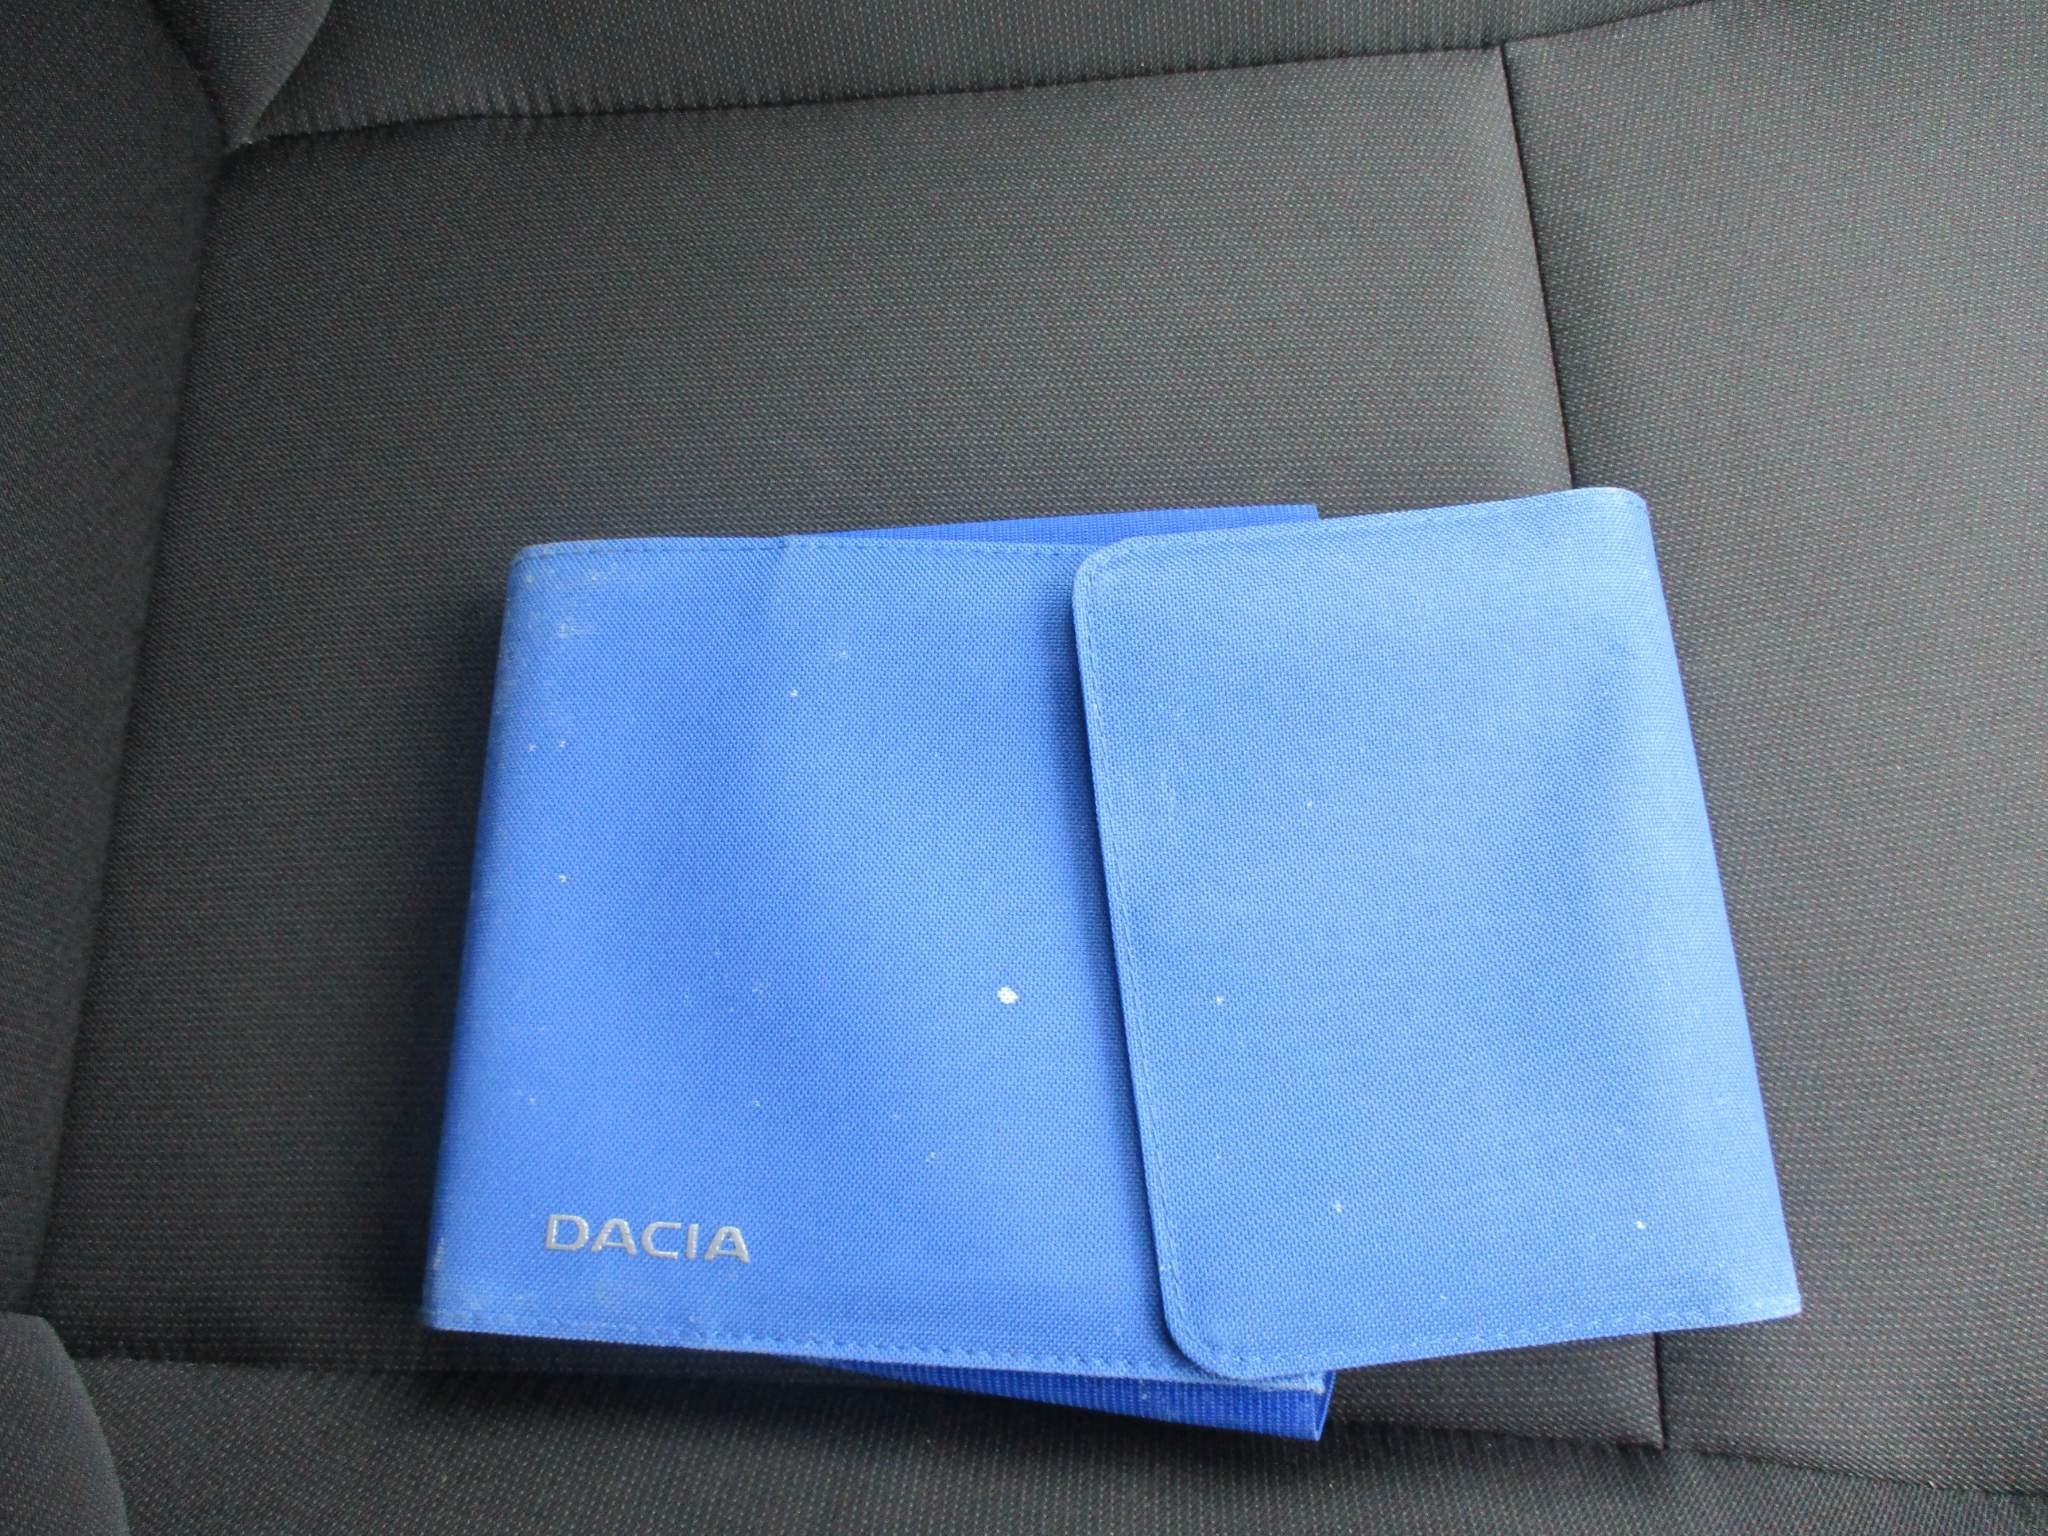 Dacia Sandero Access SCe 65 (YM71GJV) image 19